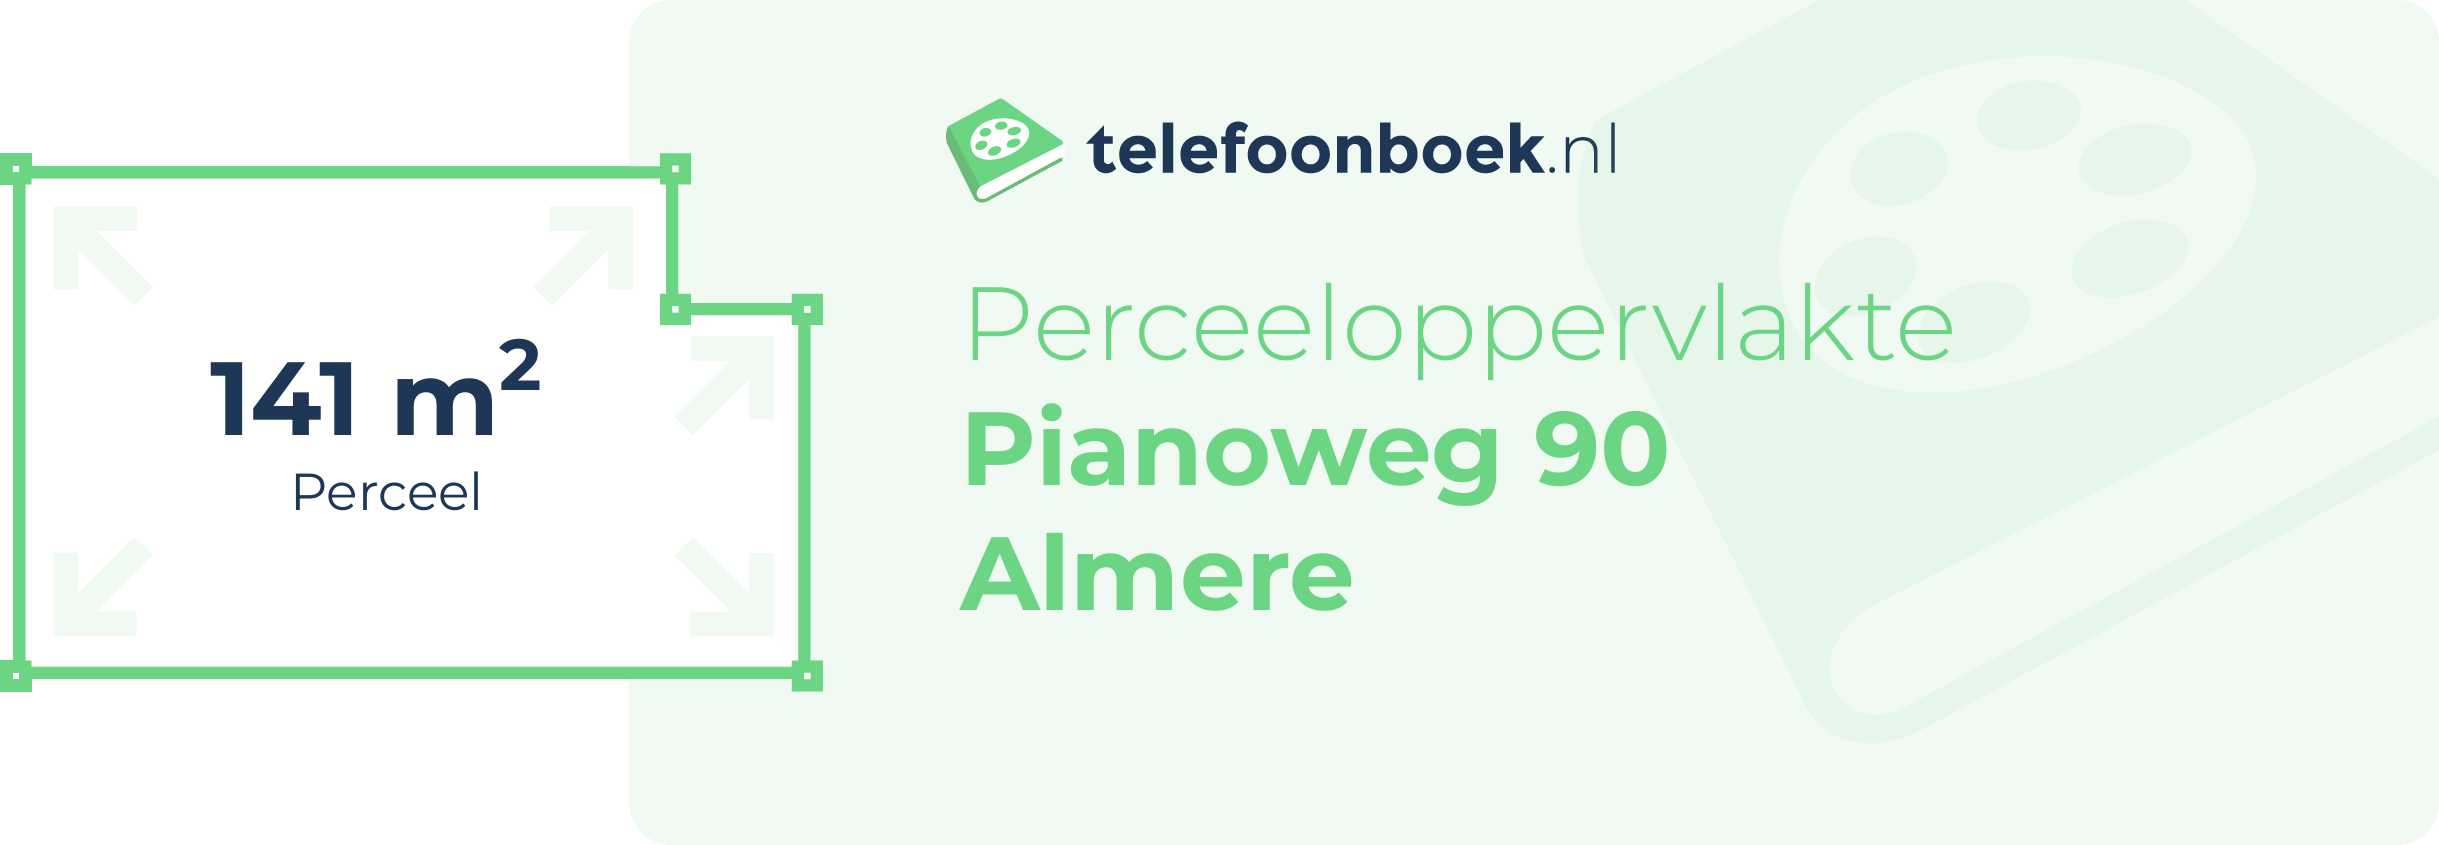 Perceeloppervlakte Pianoweg 90 Almere